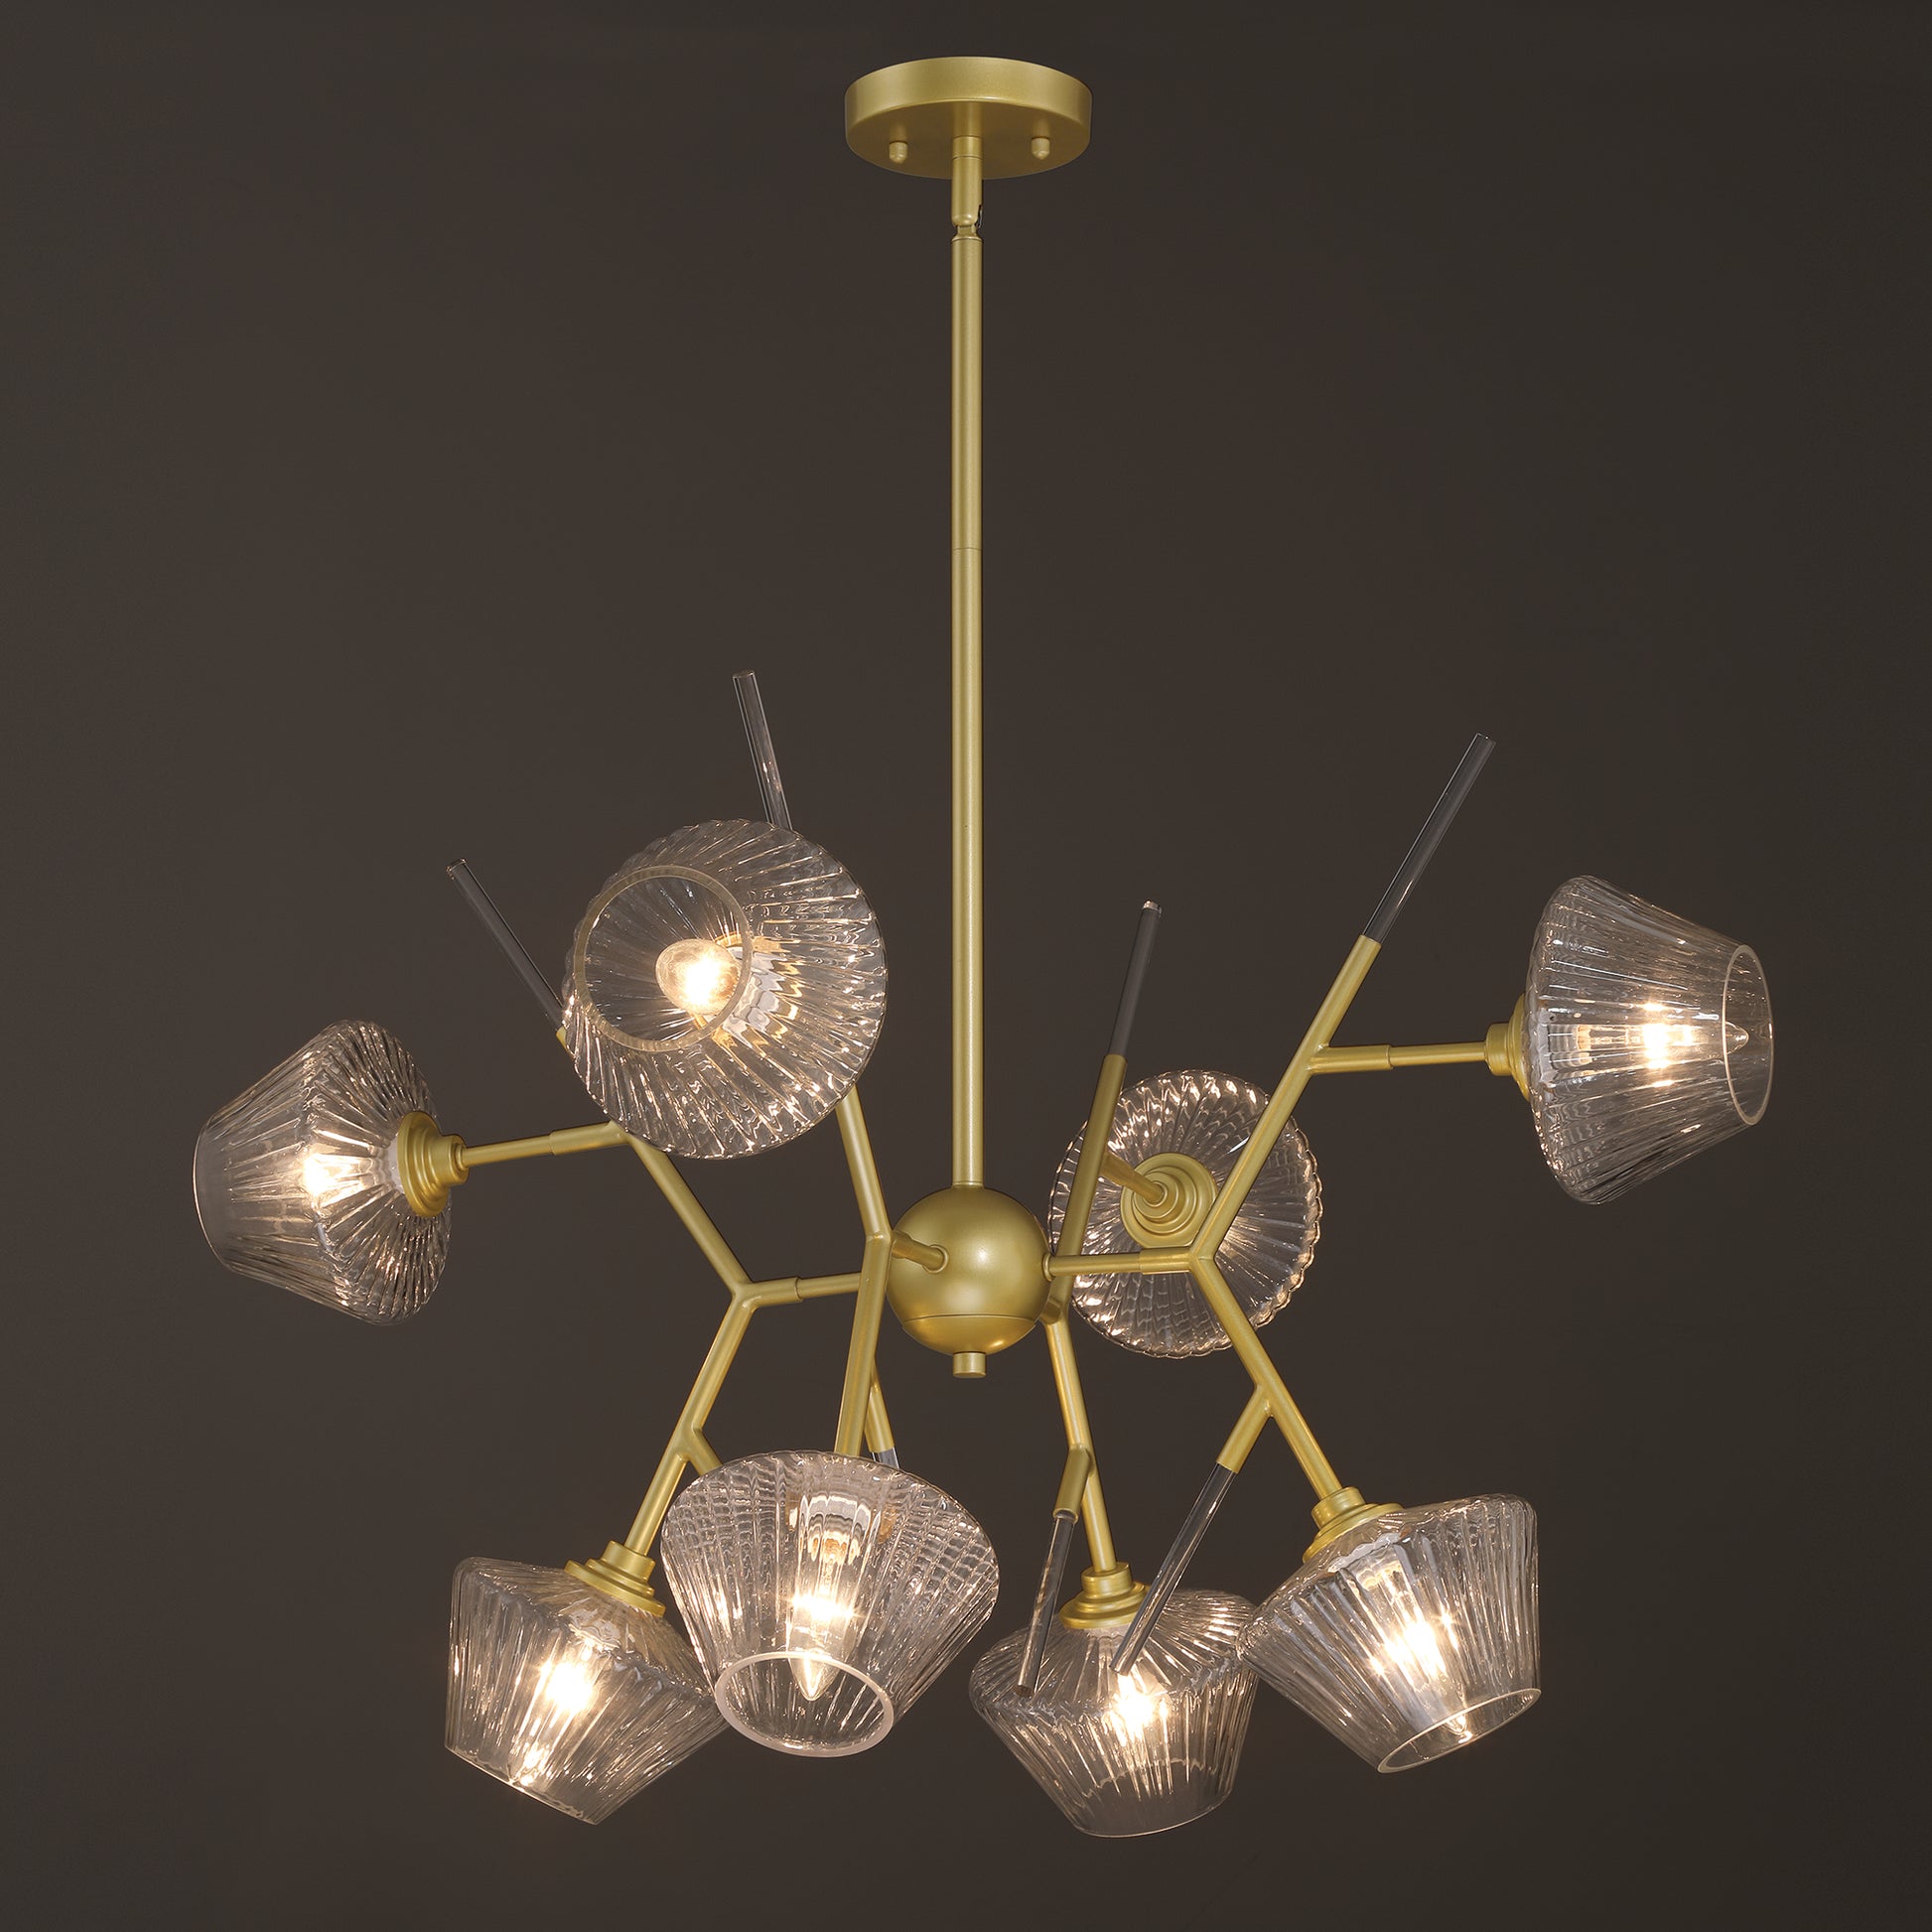 8 light sputnik empire chandelier (9) by ACROMA